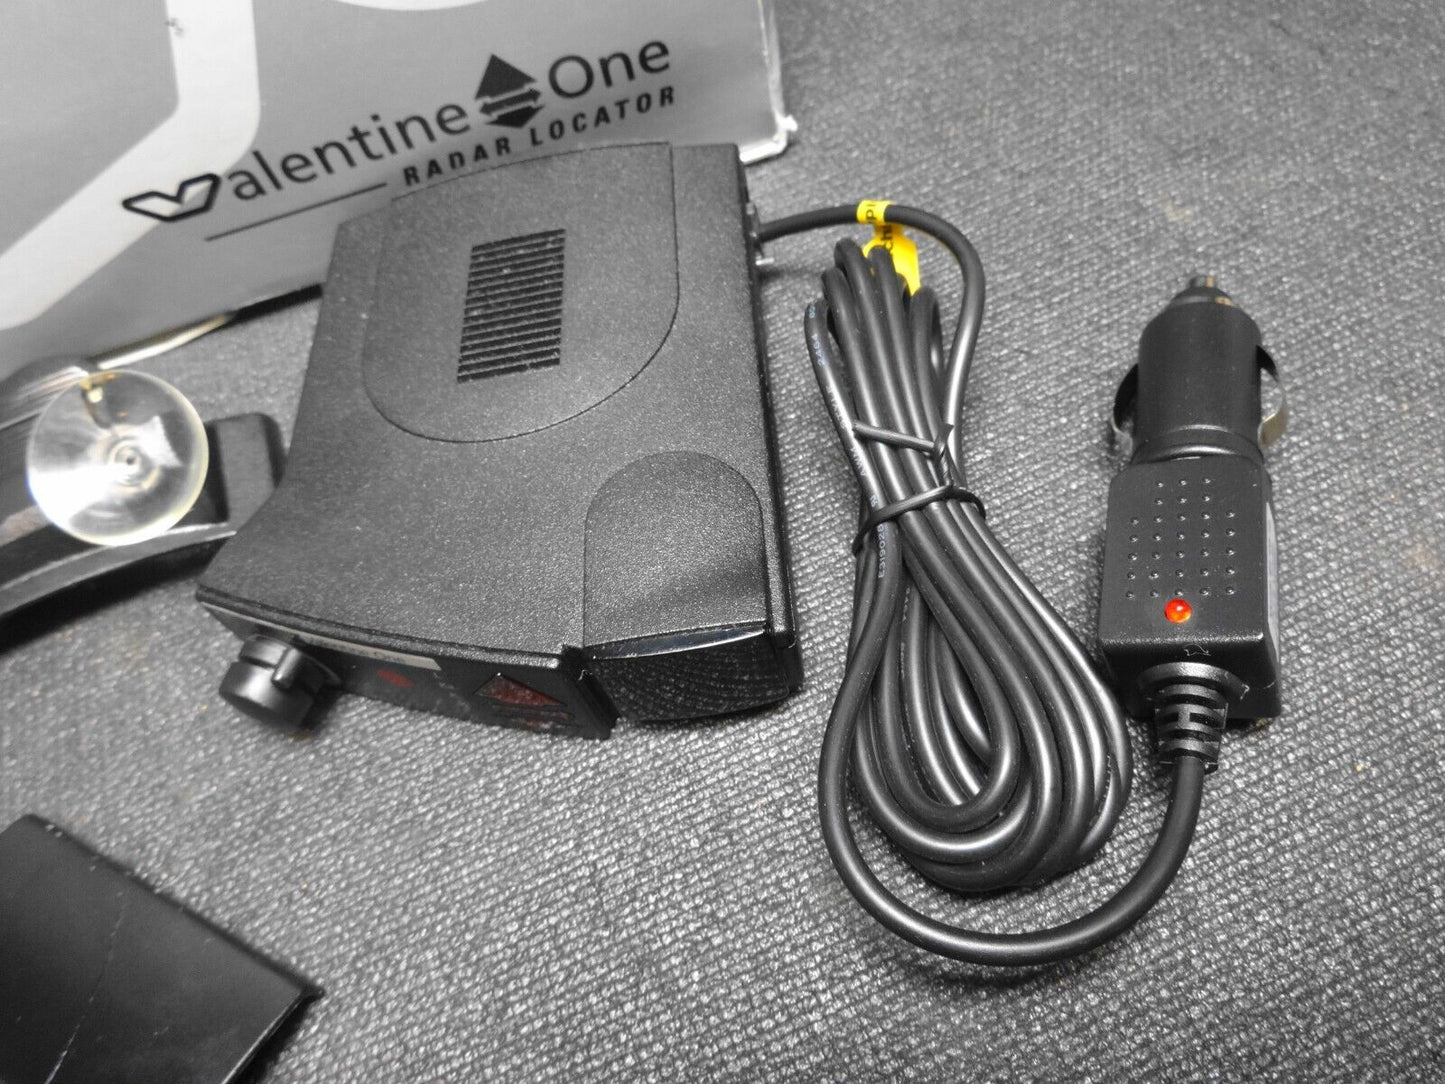 Valentine One Radar Laser Detector V1 Gen1 w/ Bracket & 12v Power Adapter in Box